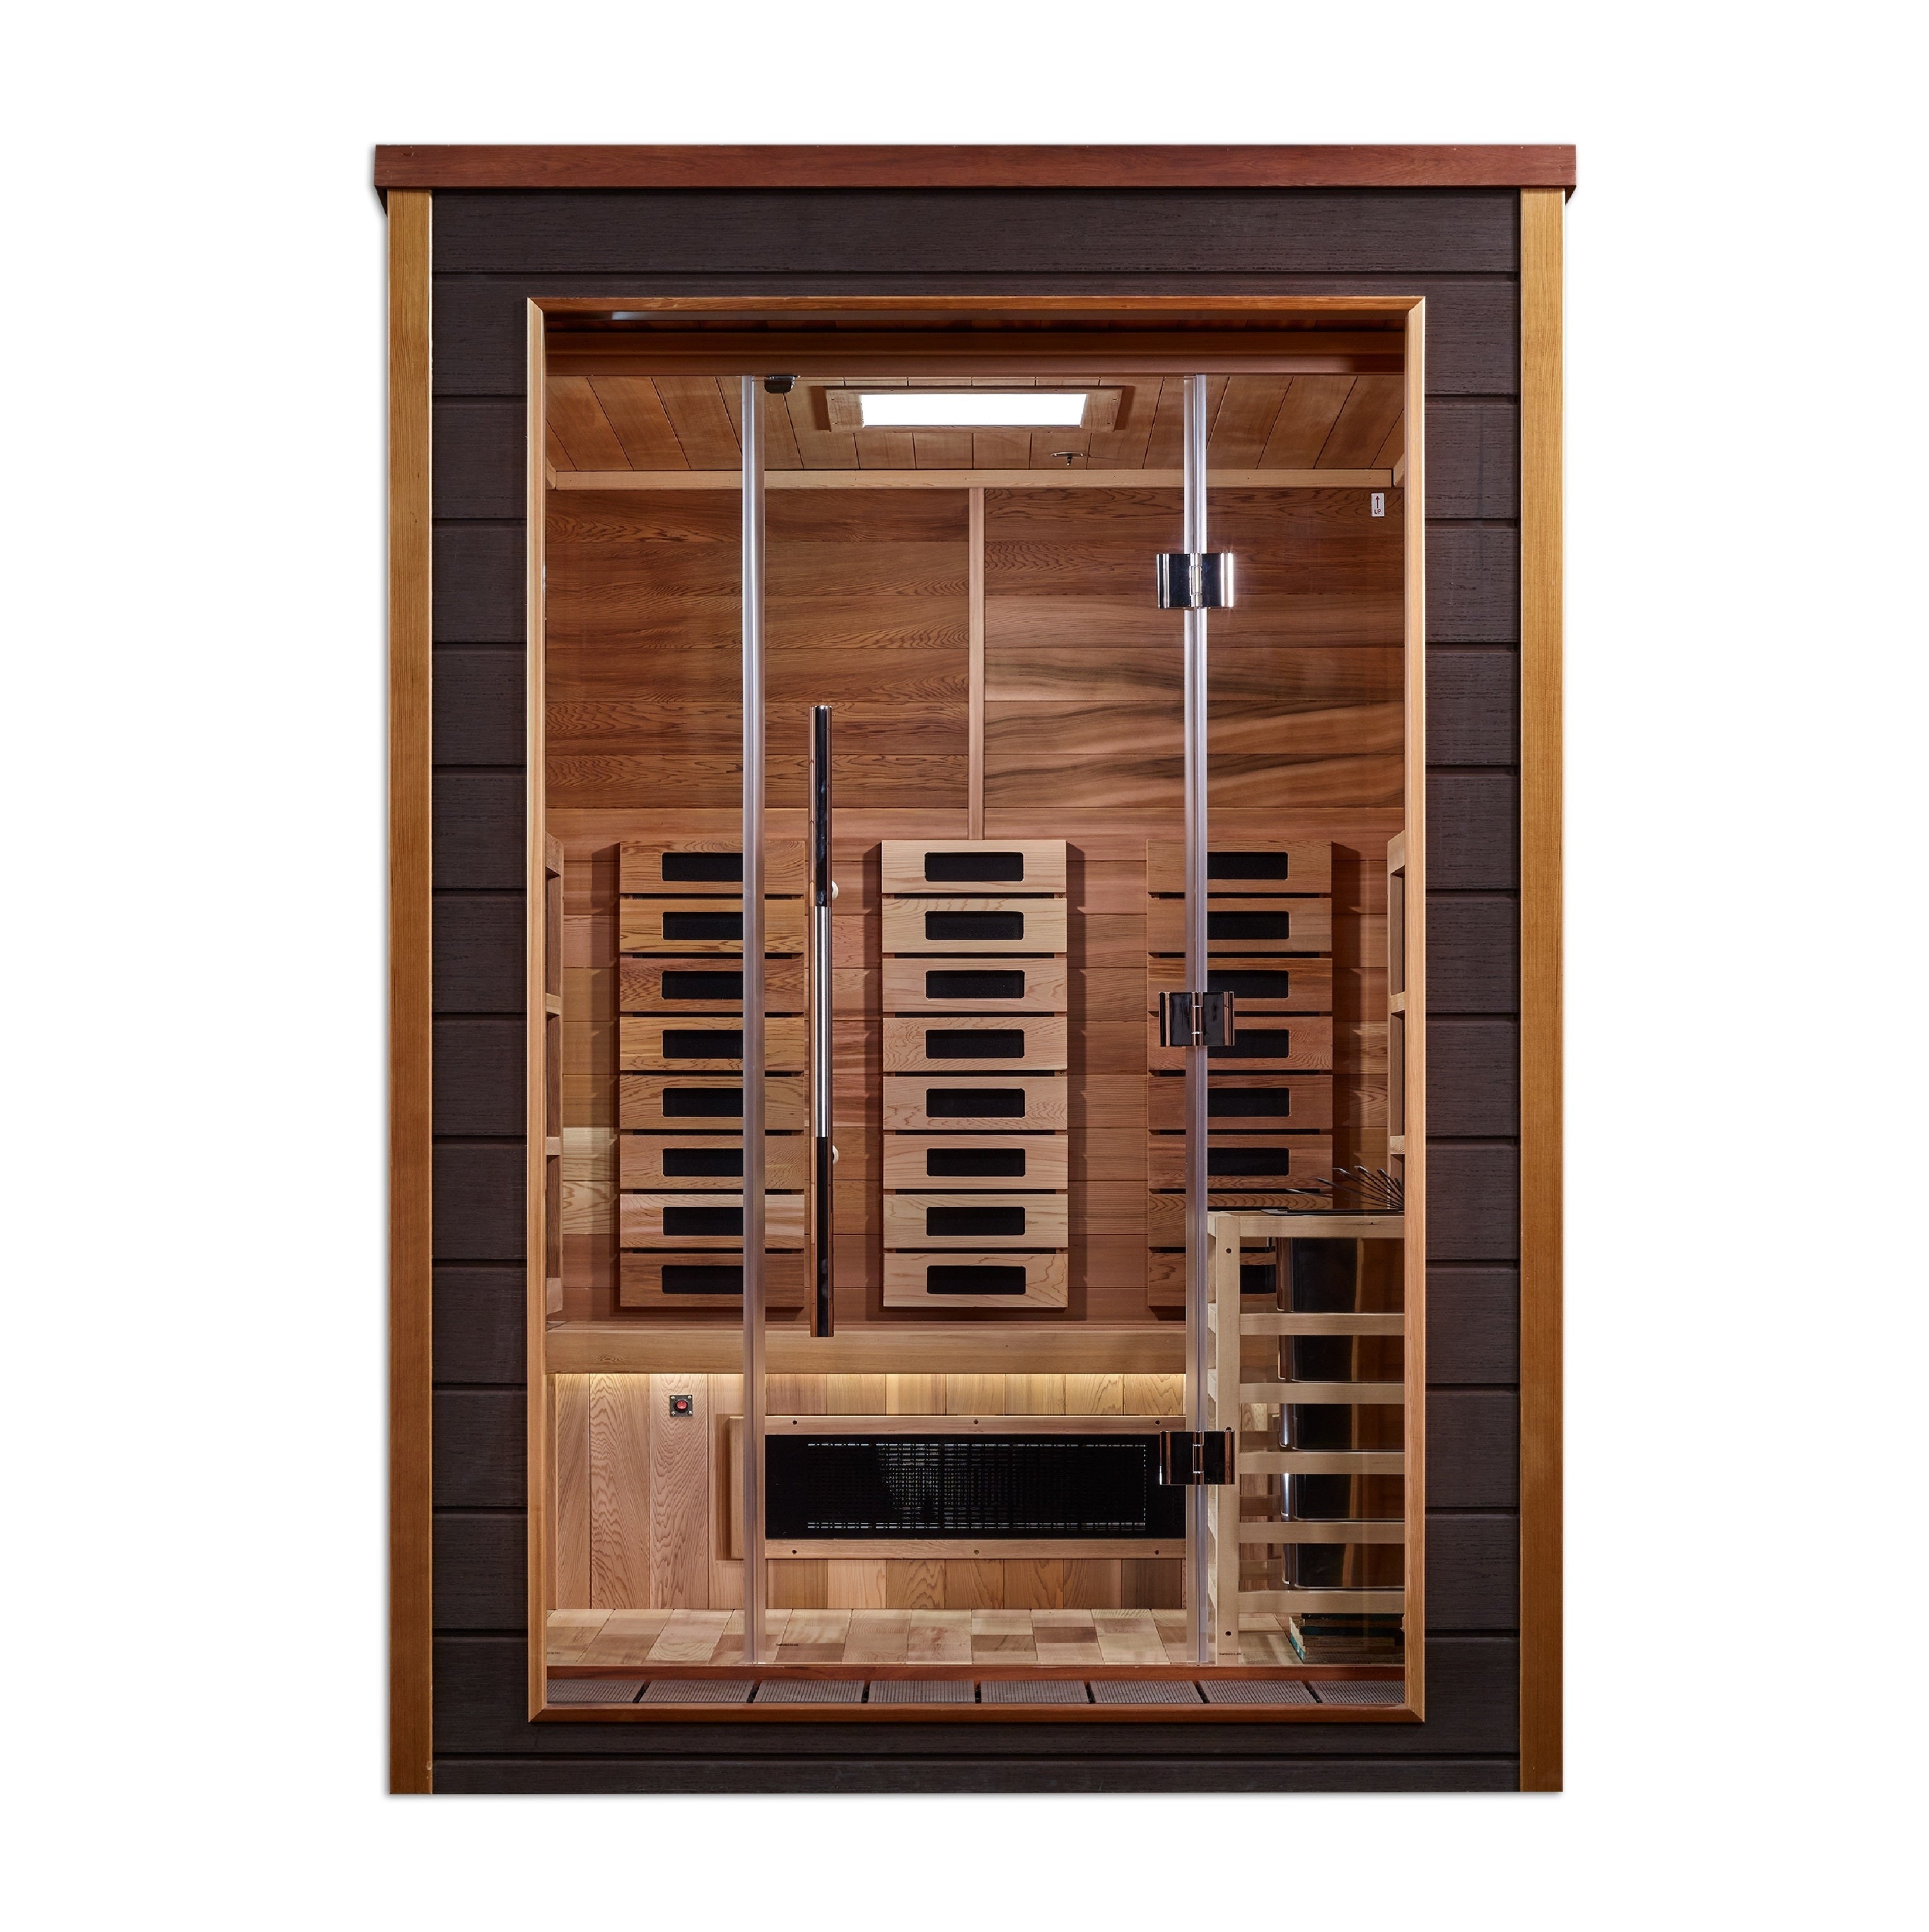 Golden Designs "Nora" 2-Person Outdoor/Indoor PureTech™ Hybrid Full Spectrum Sauna (GDI-8222-01) - Red Cedar Interior (infrared+traditional)